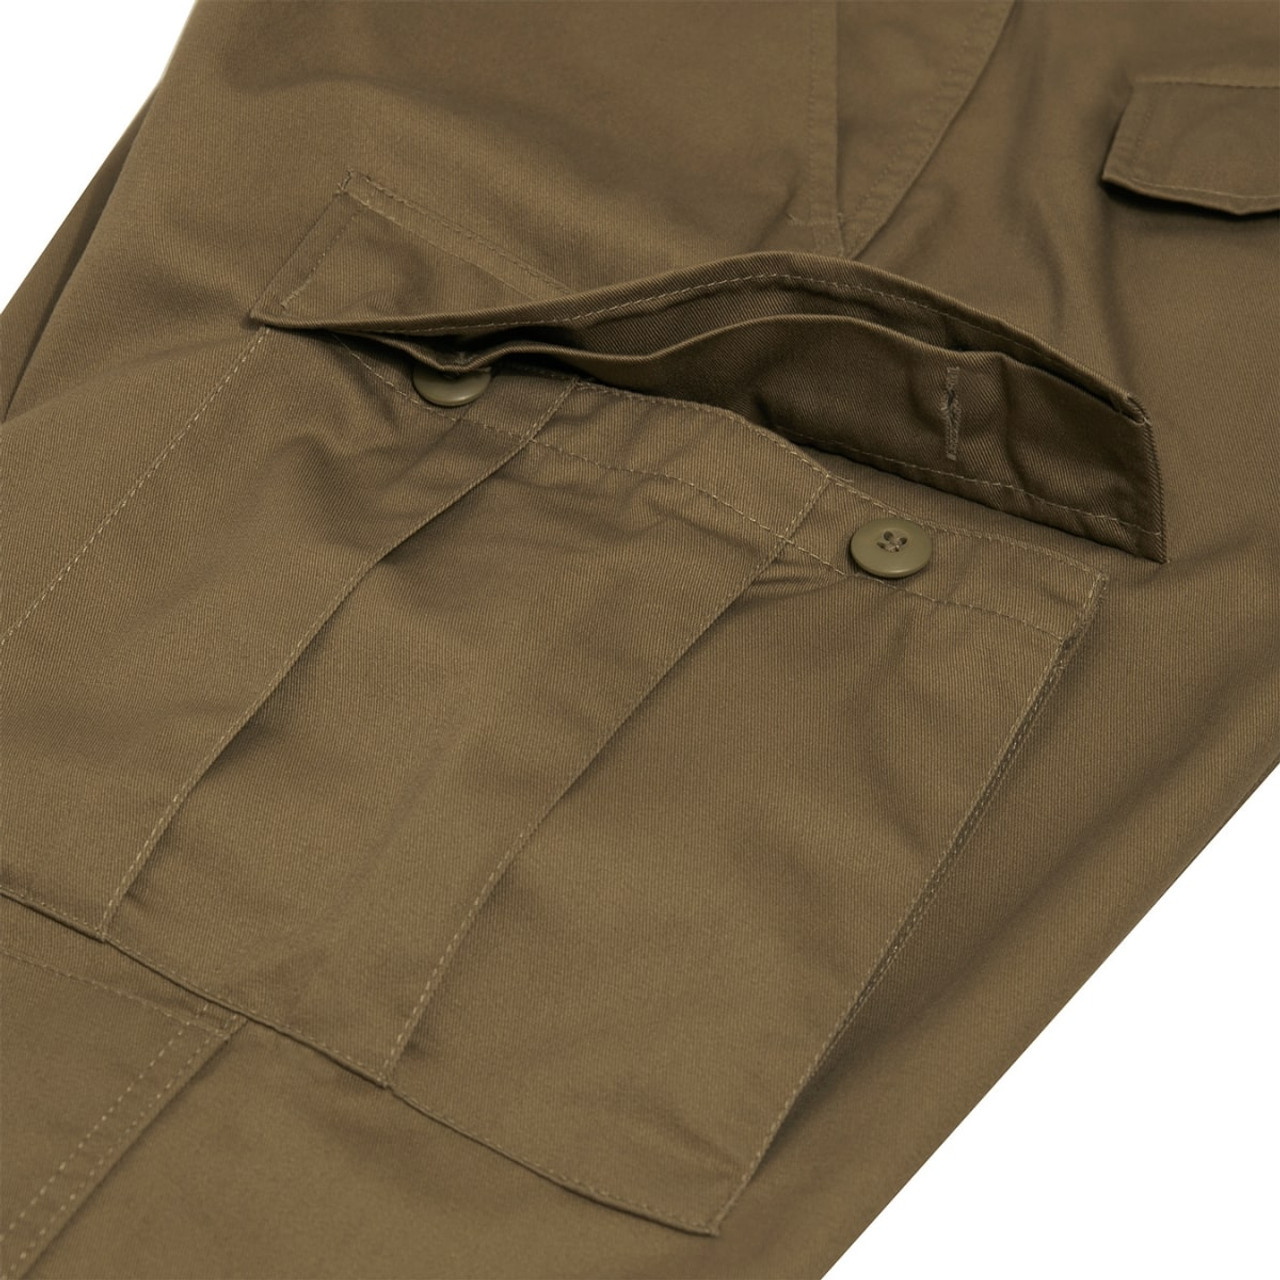 Rothco Tactical BDU Cargo Pants - ArmyNavyOutdoors.com